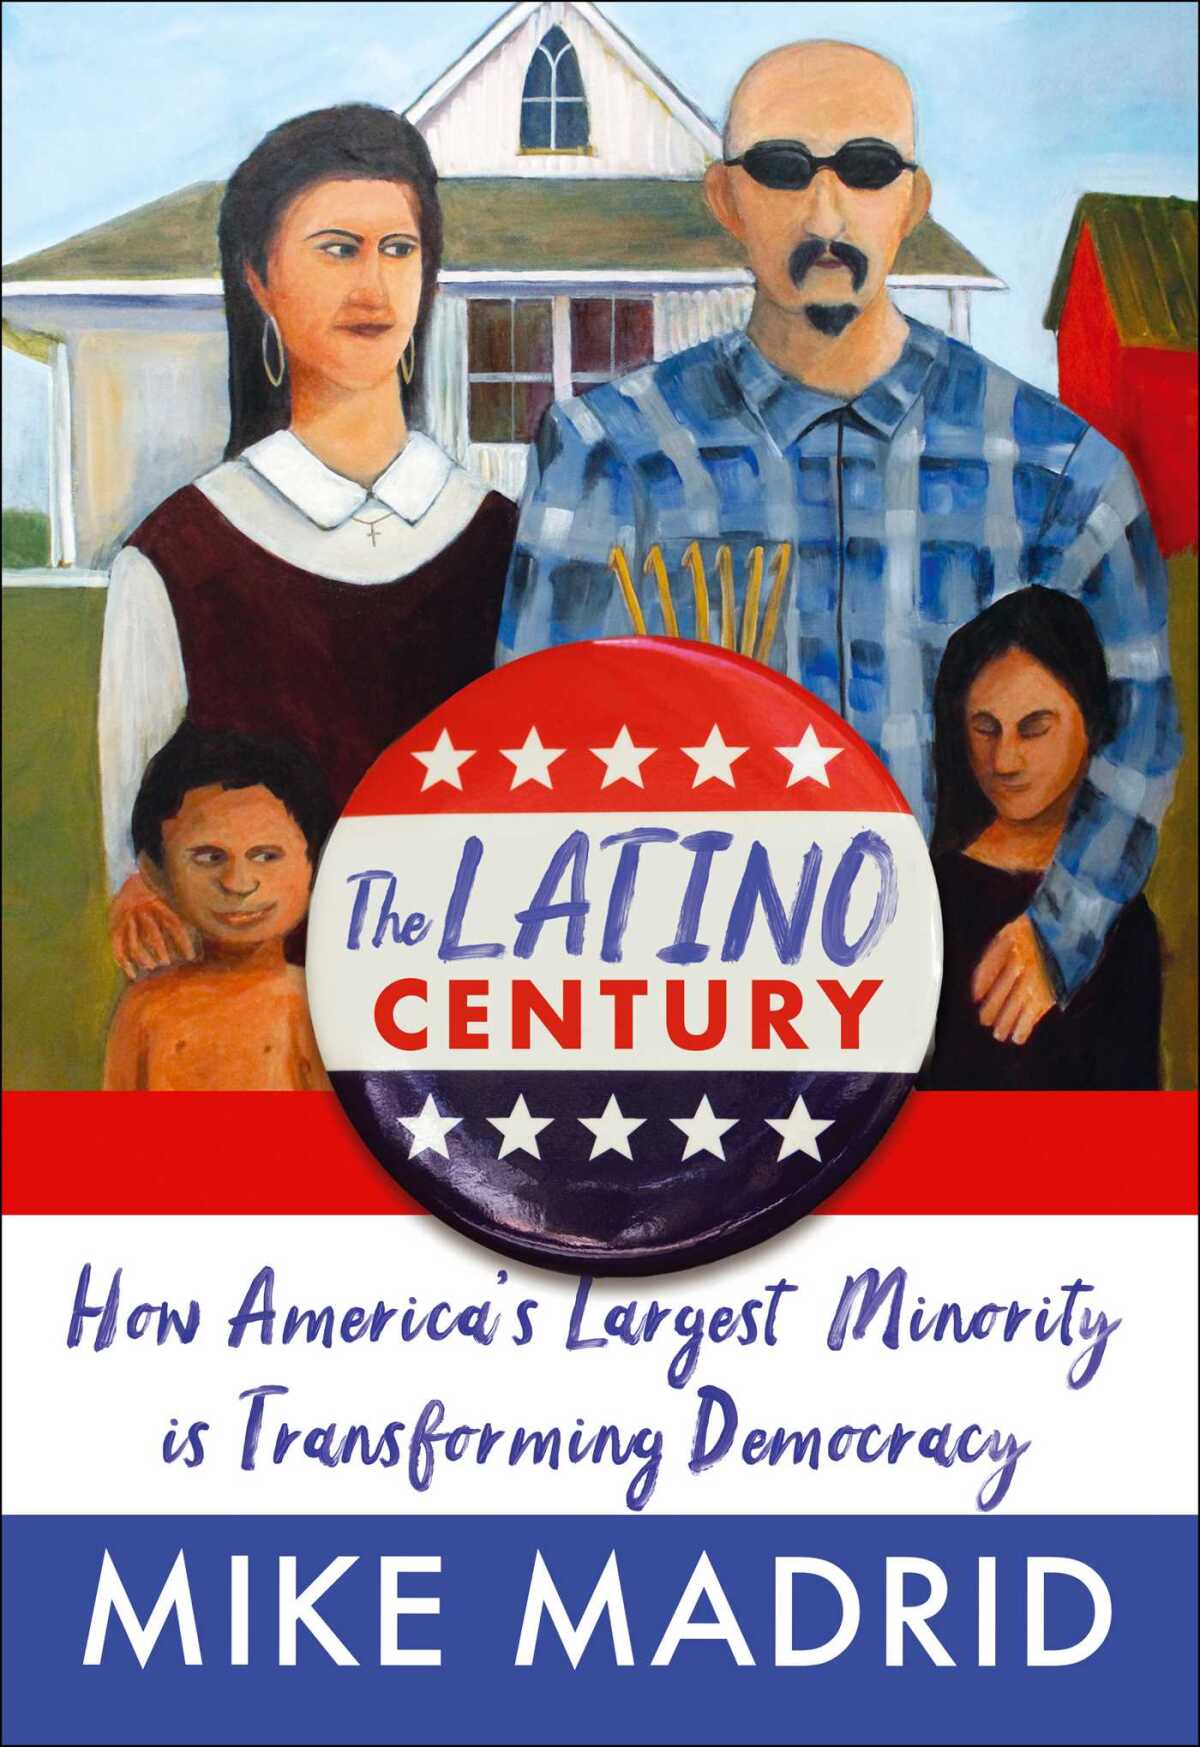 "The Latino Century" cover